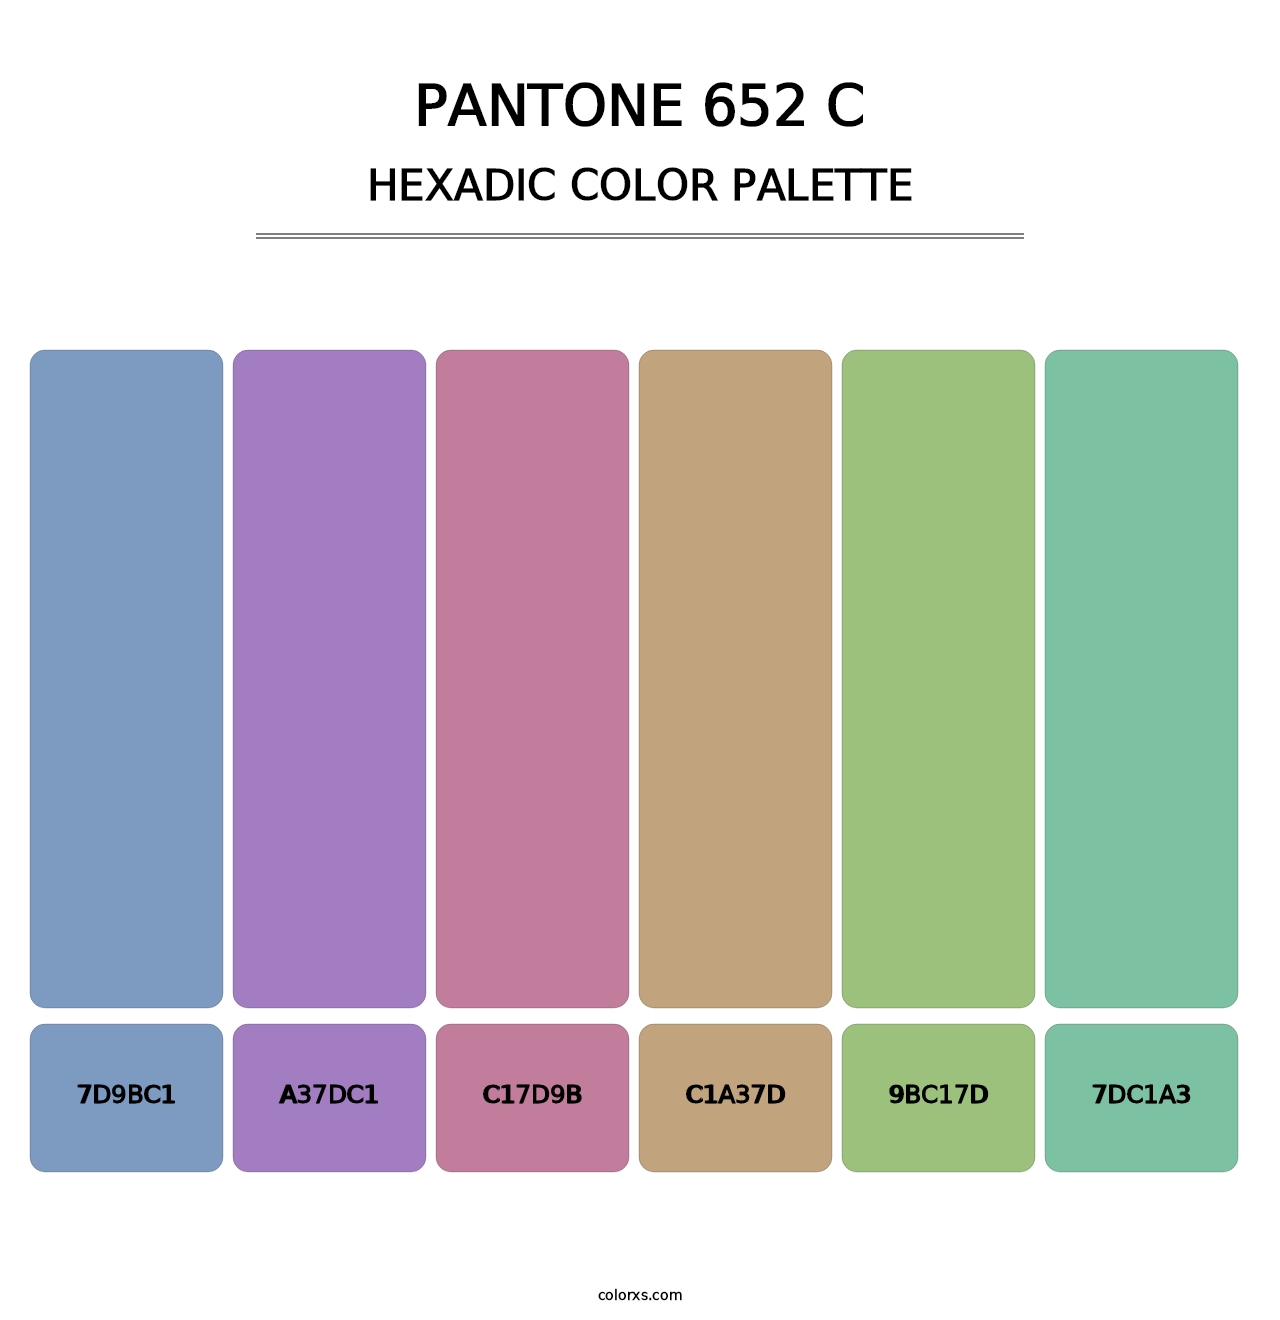 PANTONE 652 C - Hexadic Color Palette